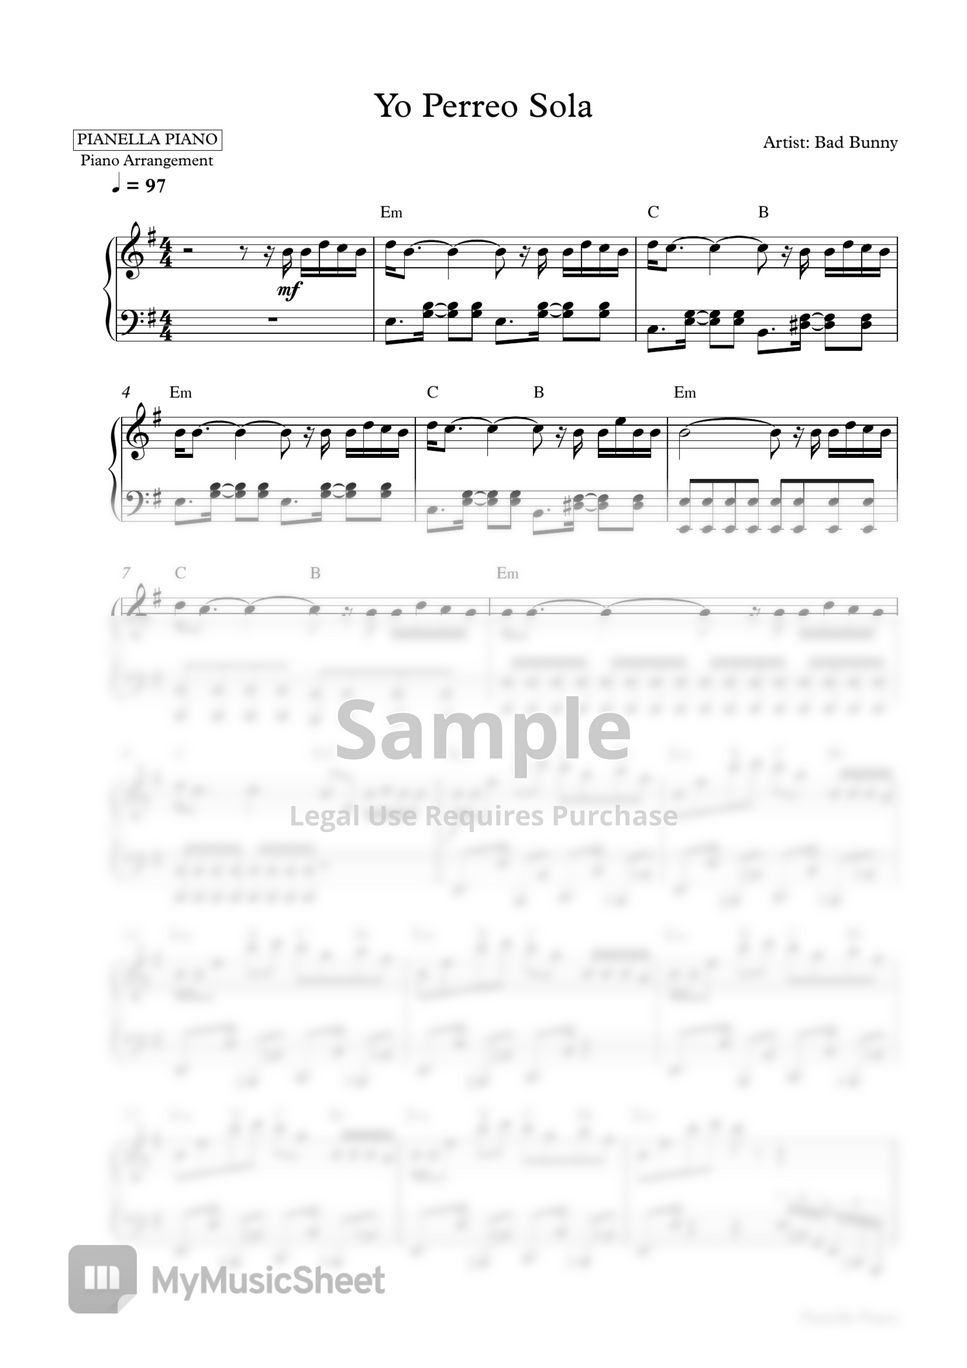 Bad Bunny - Yo Perreo Sola (Piano Sheet) by Pianella Piano